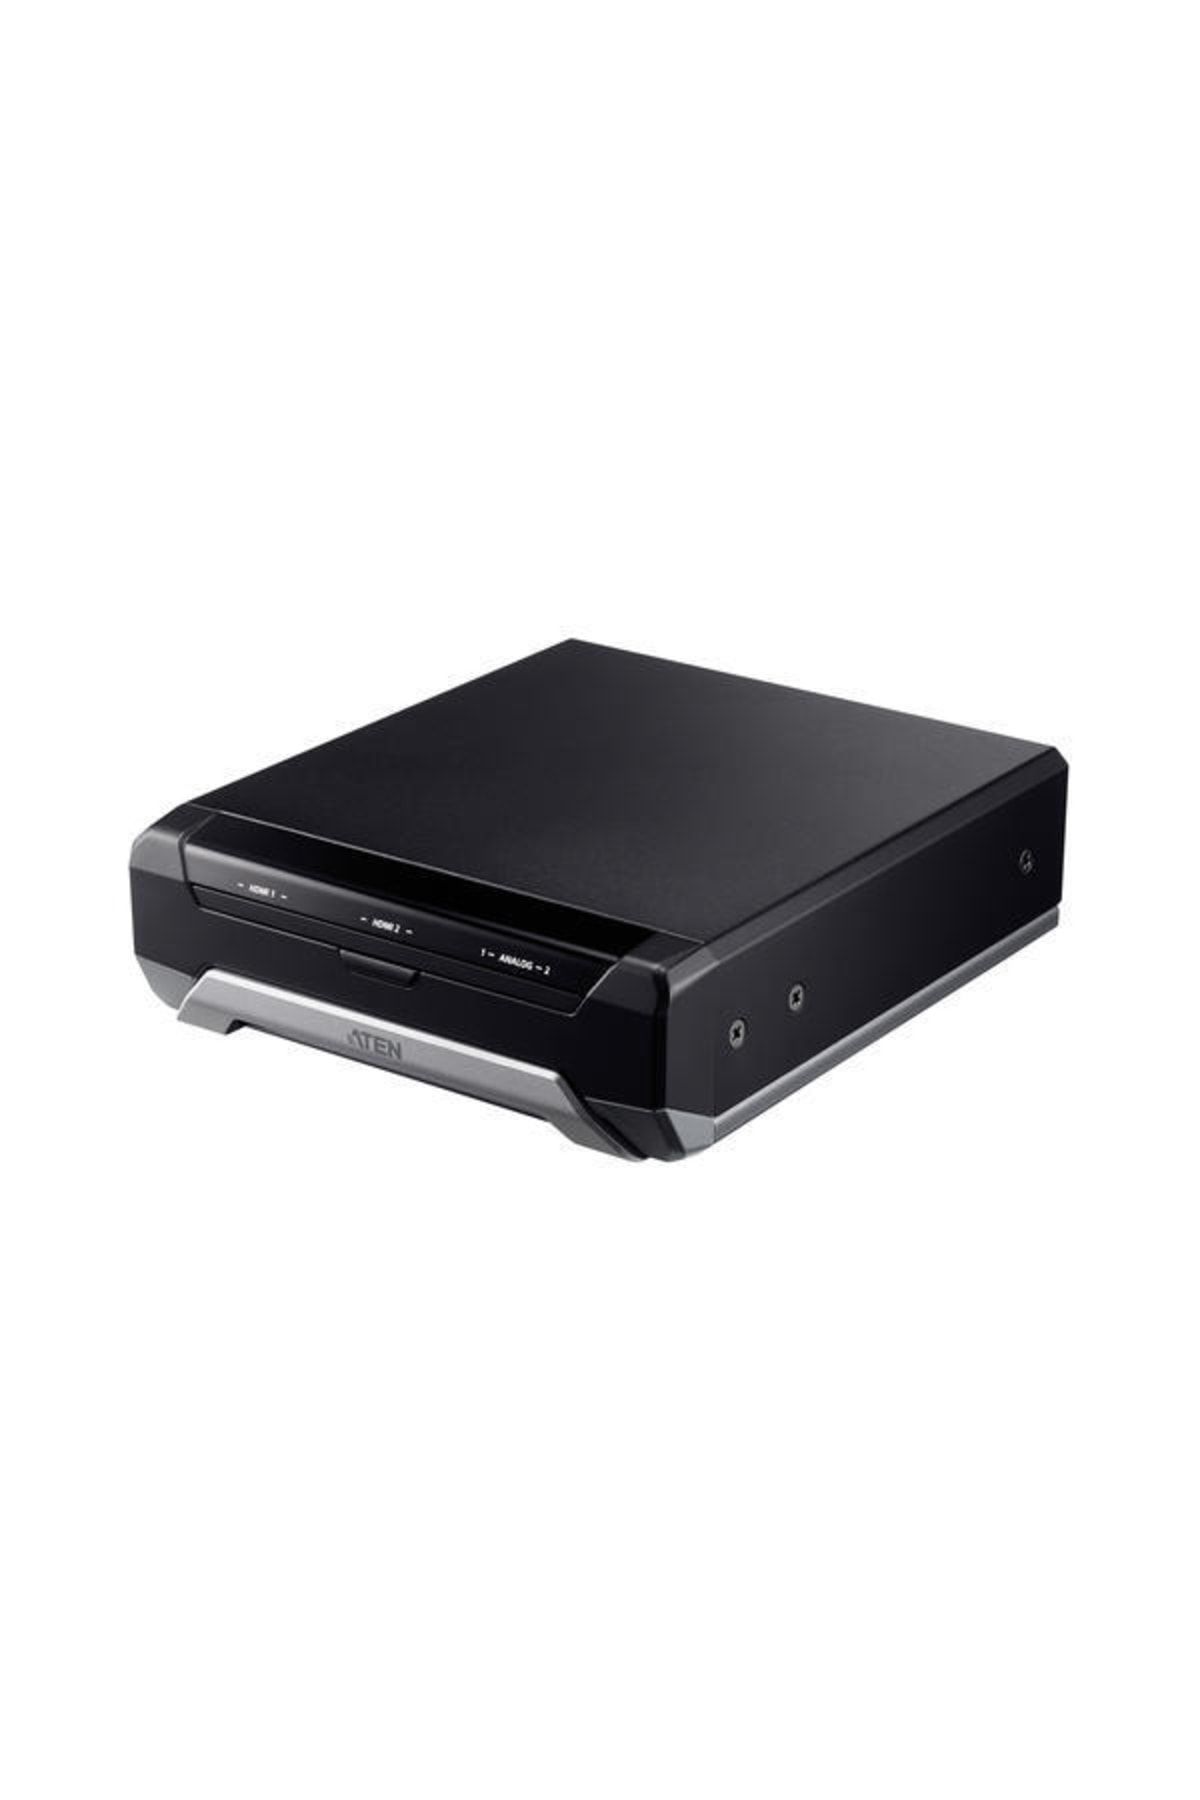 Aten Uc3022 Dual 2xhdmı To Usb Type B 3.2 Gen1 Uvc Camlive Pro Video Capture Kart